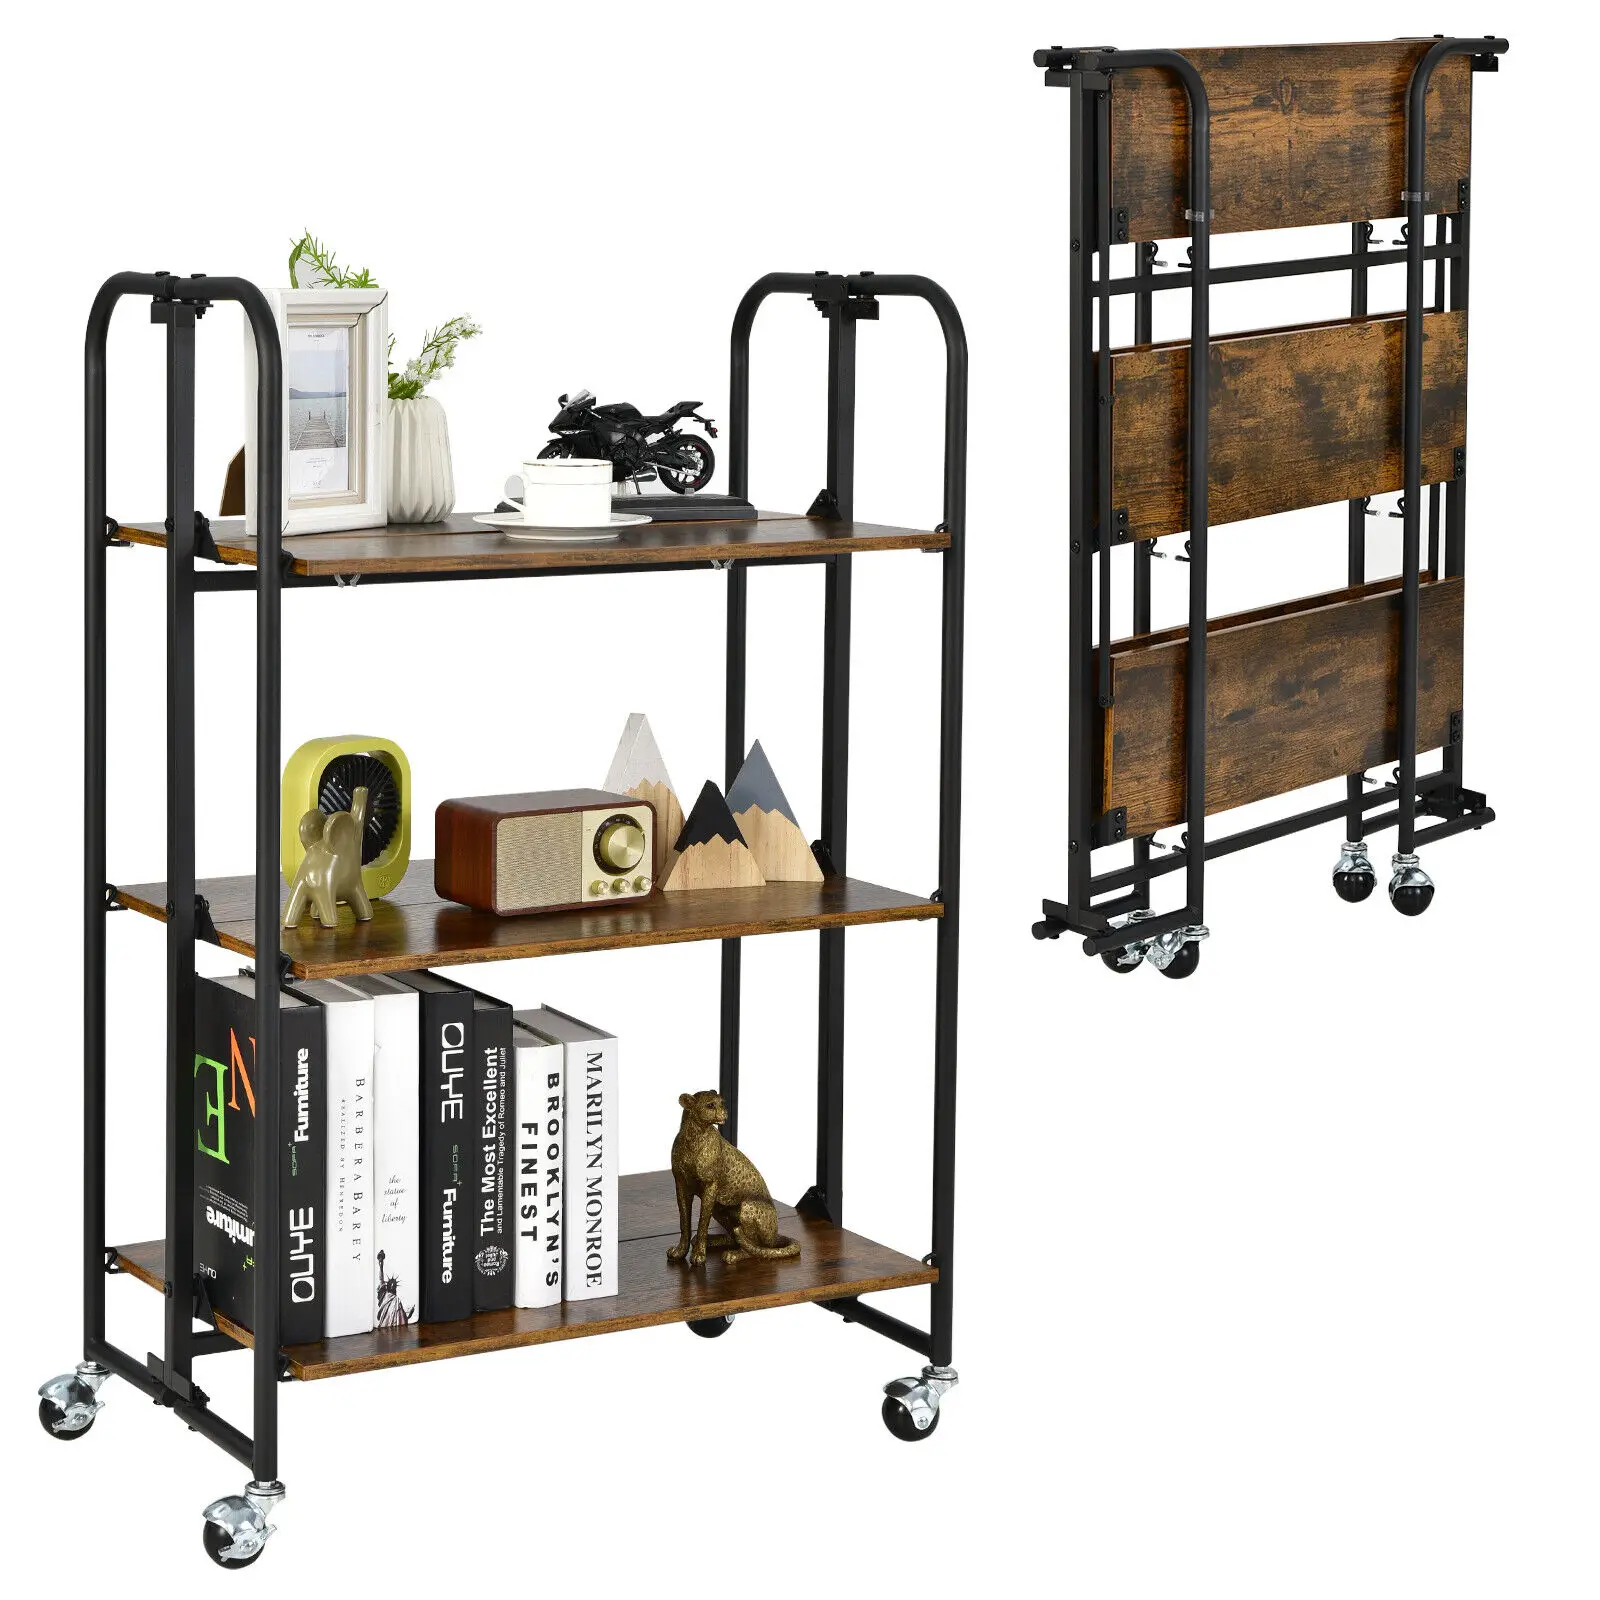 

Costway 3-Tier Folding Bar Cart Kitchen Serving Island Utility Cart Storage Shelves